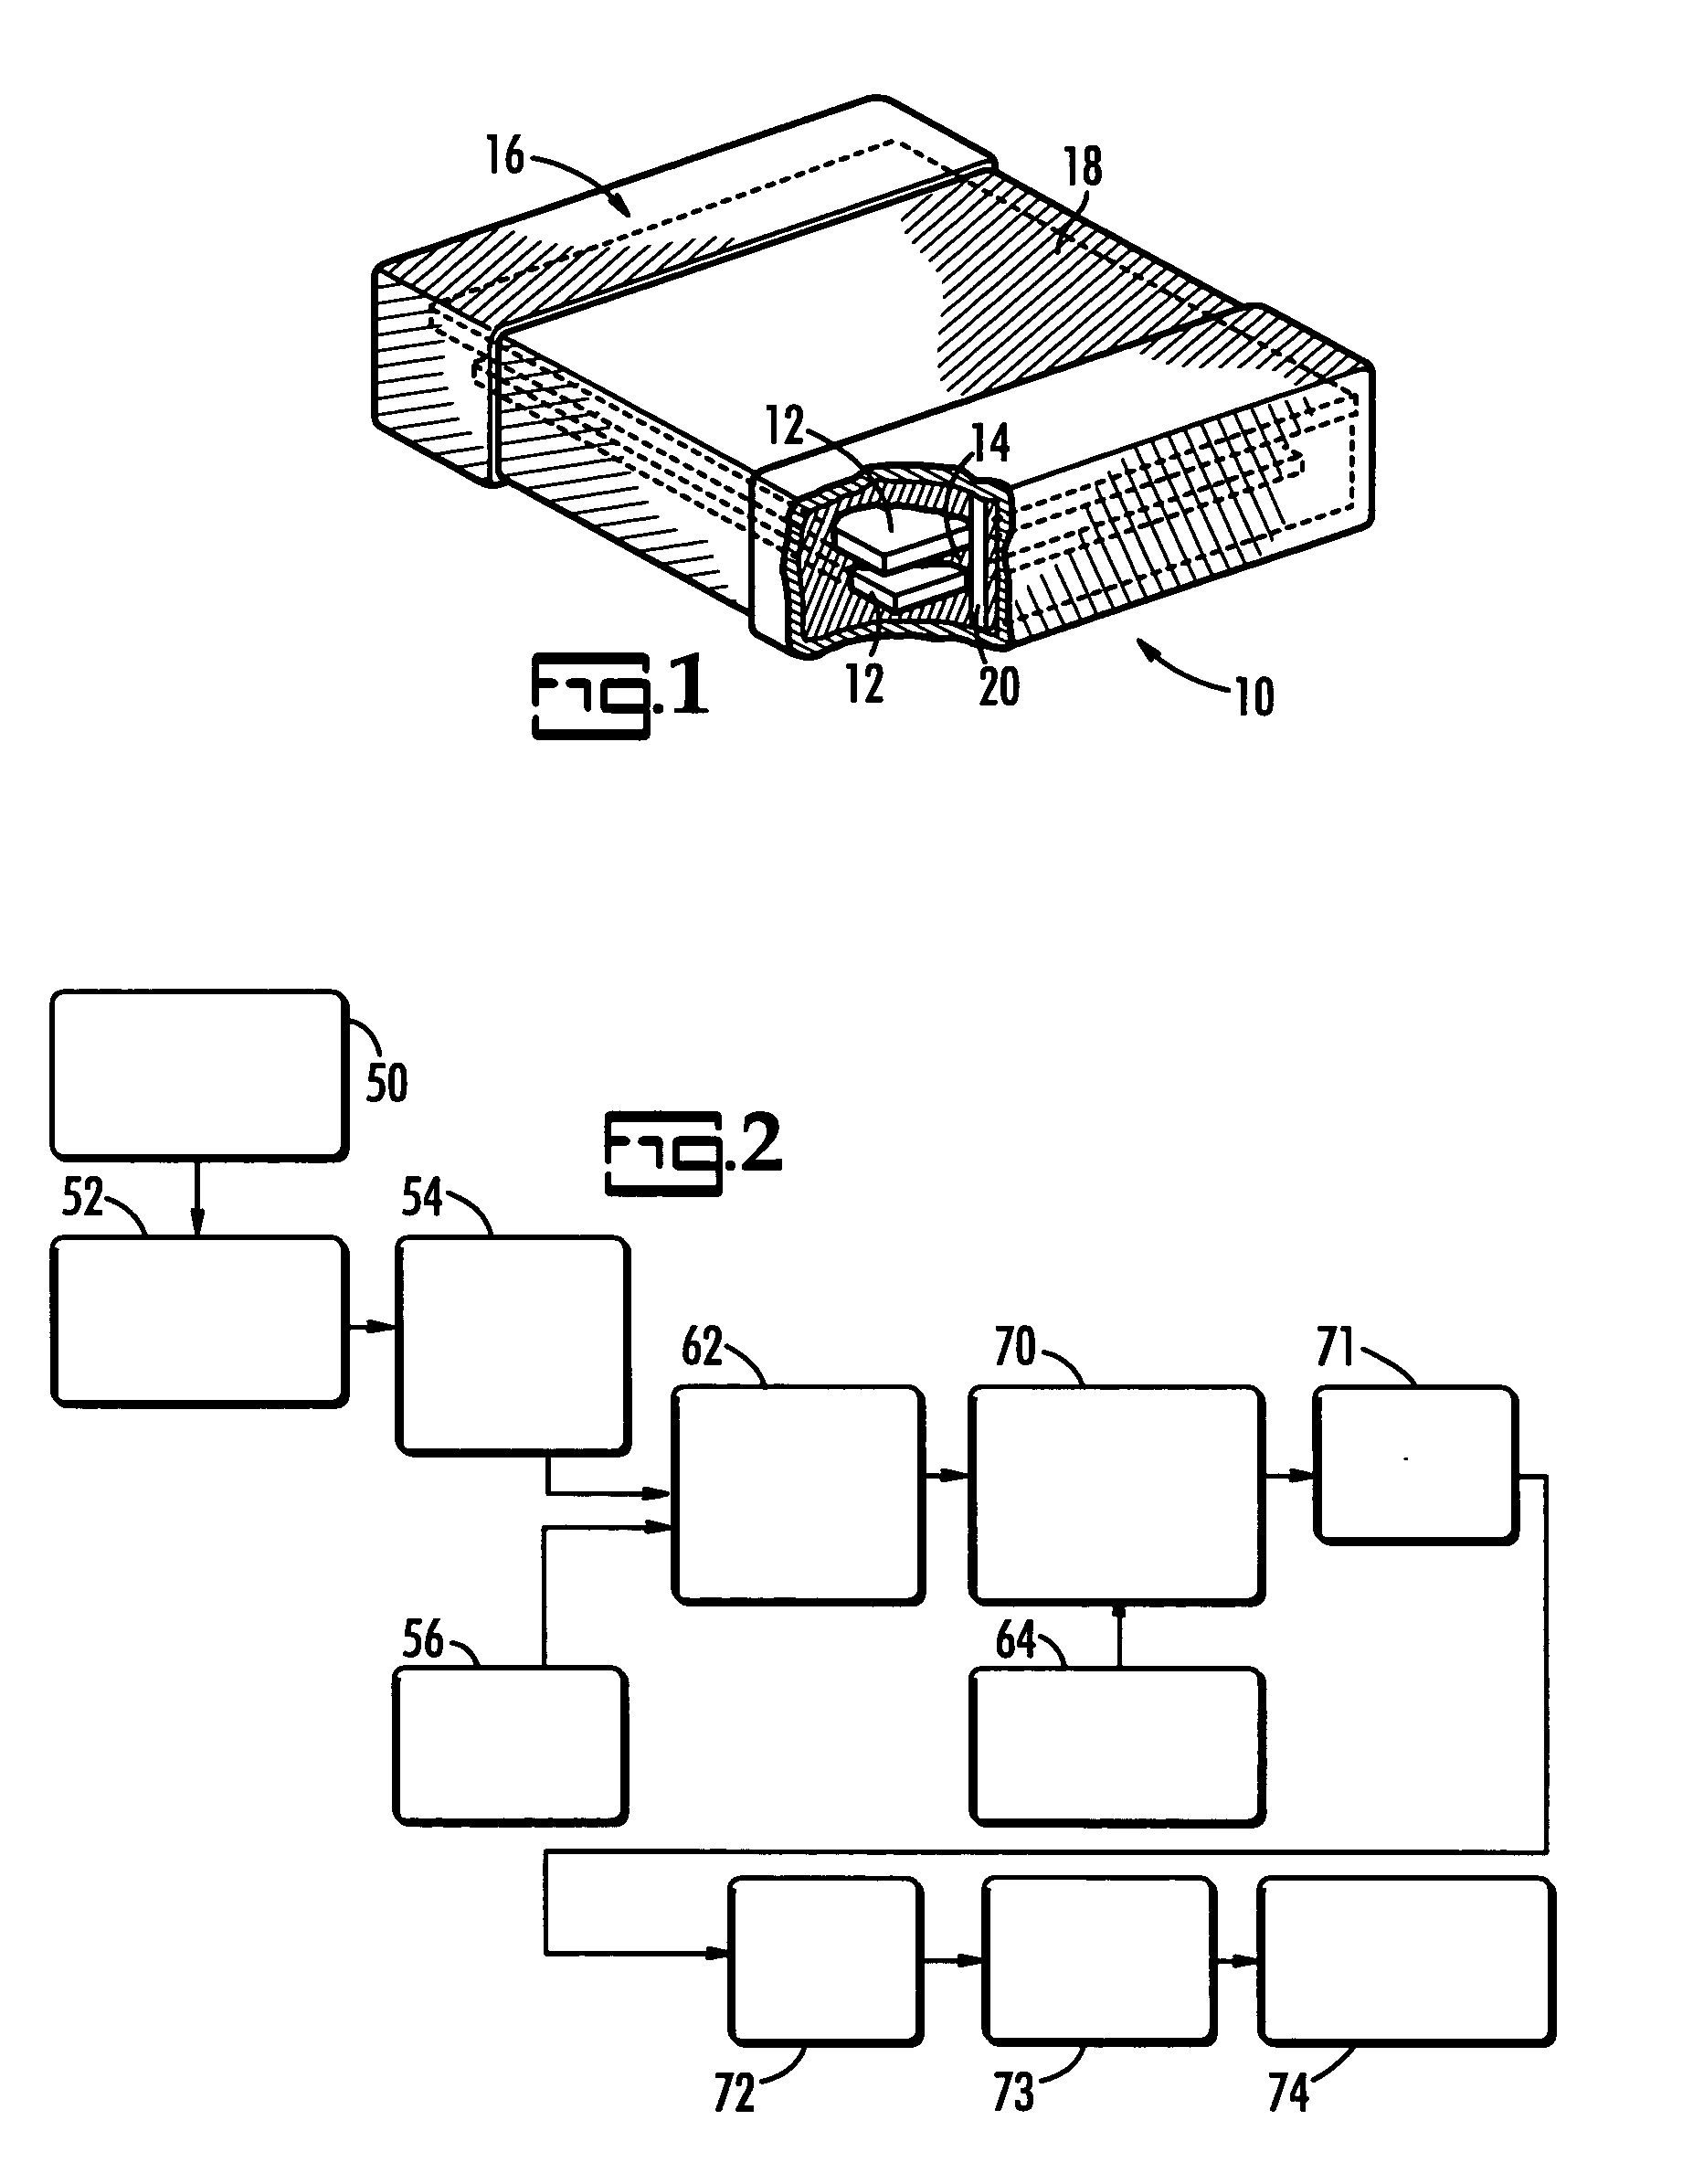 Process for manufacture of ceramic capacitors using ink jet printing